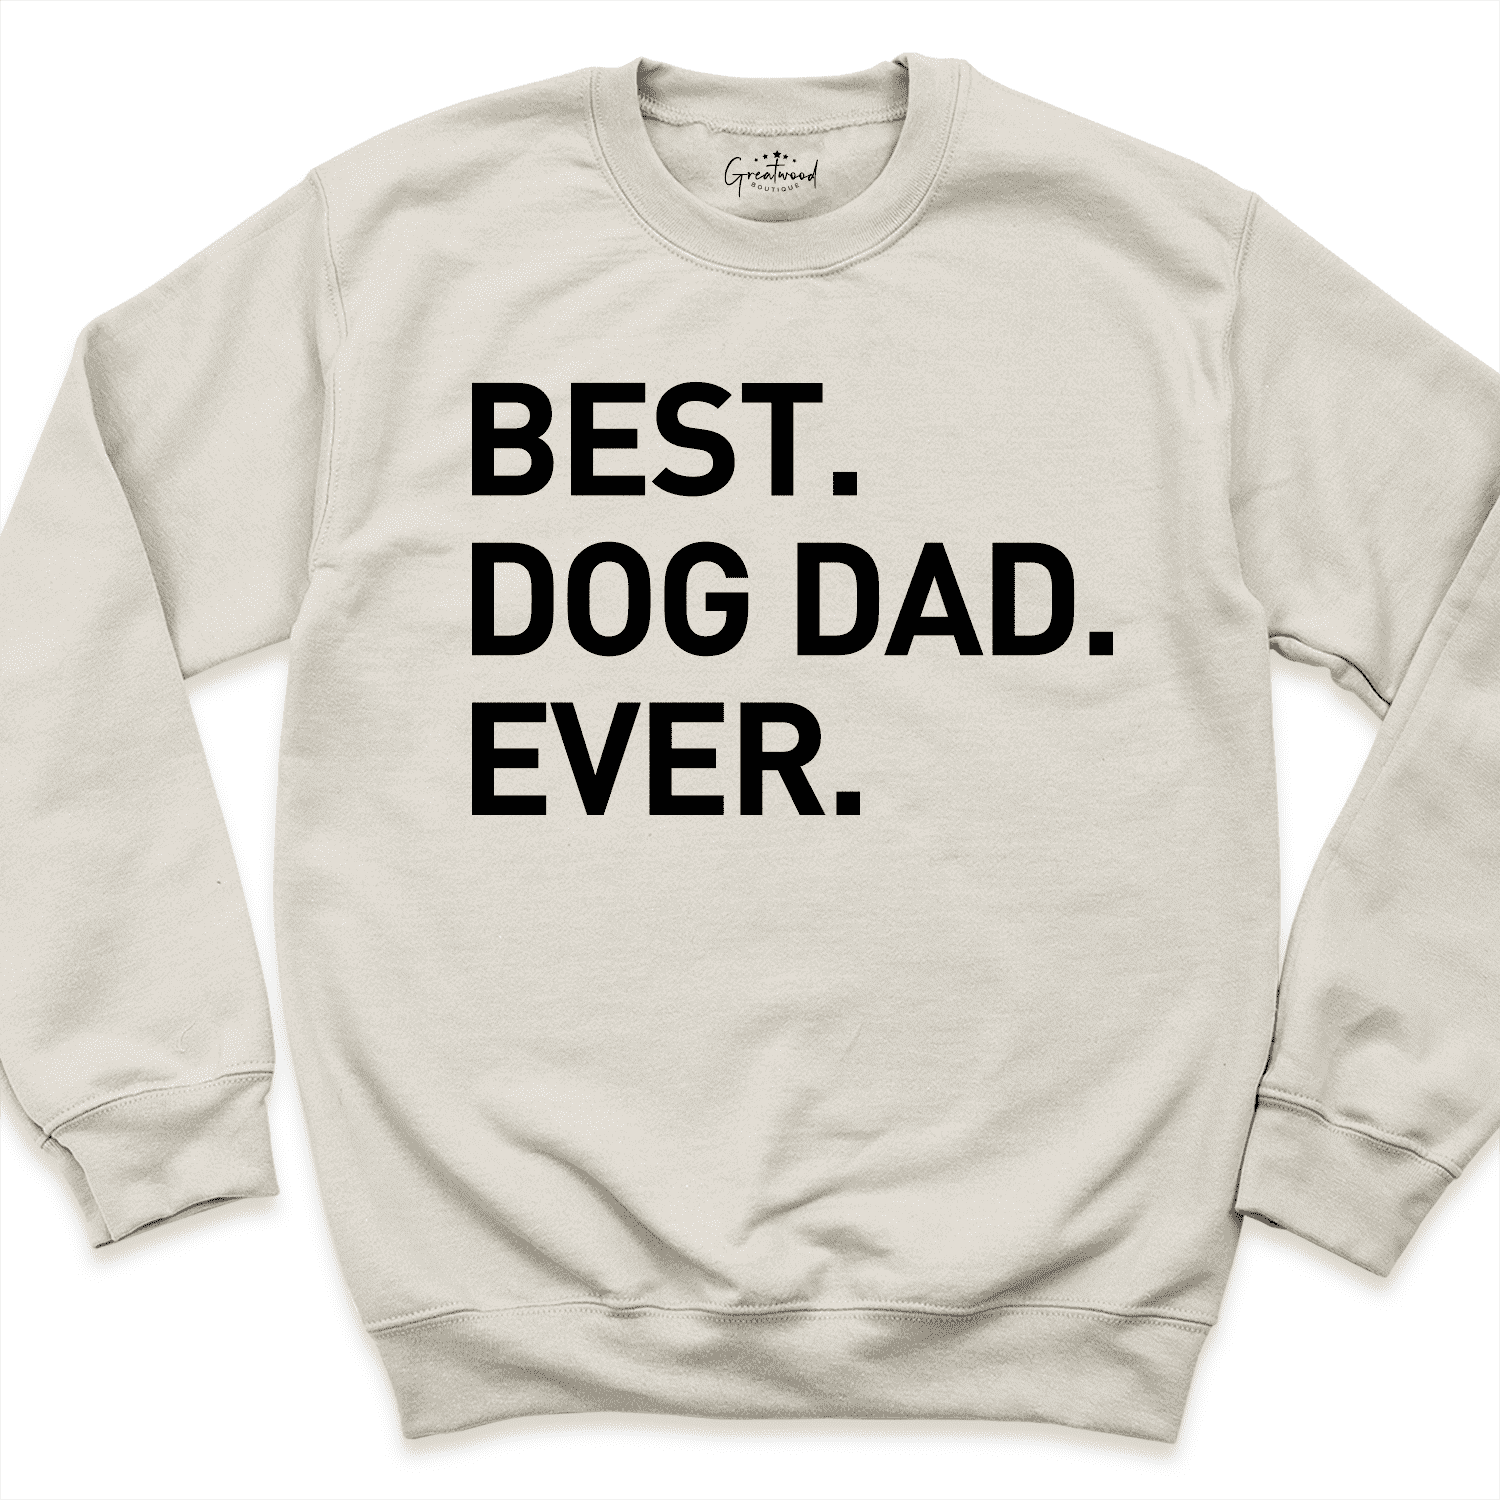 Best Dog Dad Ever Shirt Sand - greatwood boutique